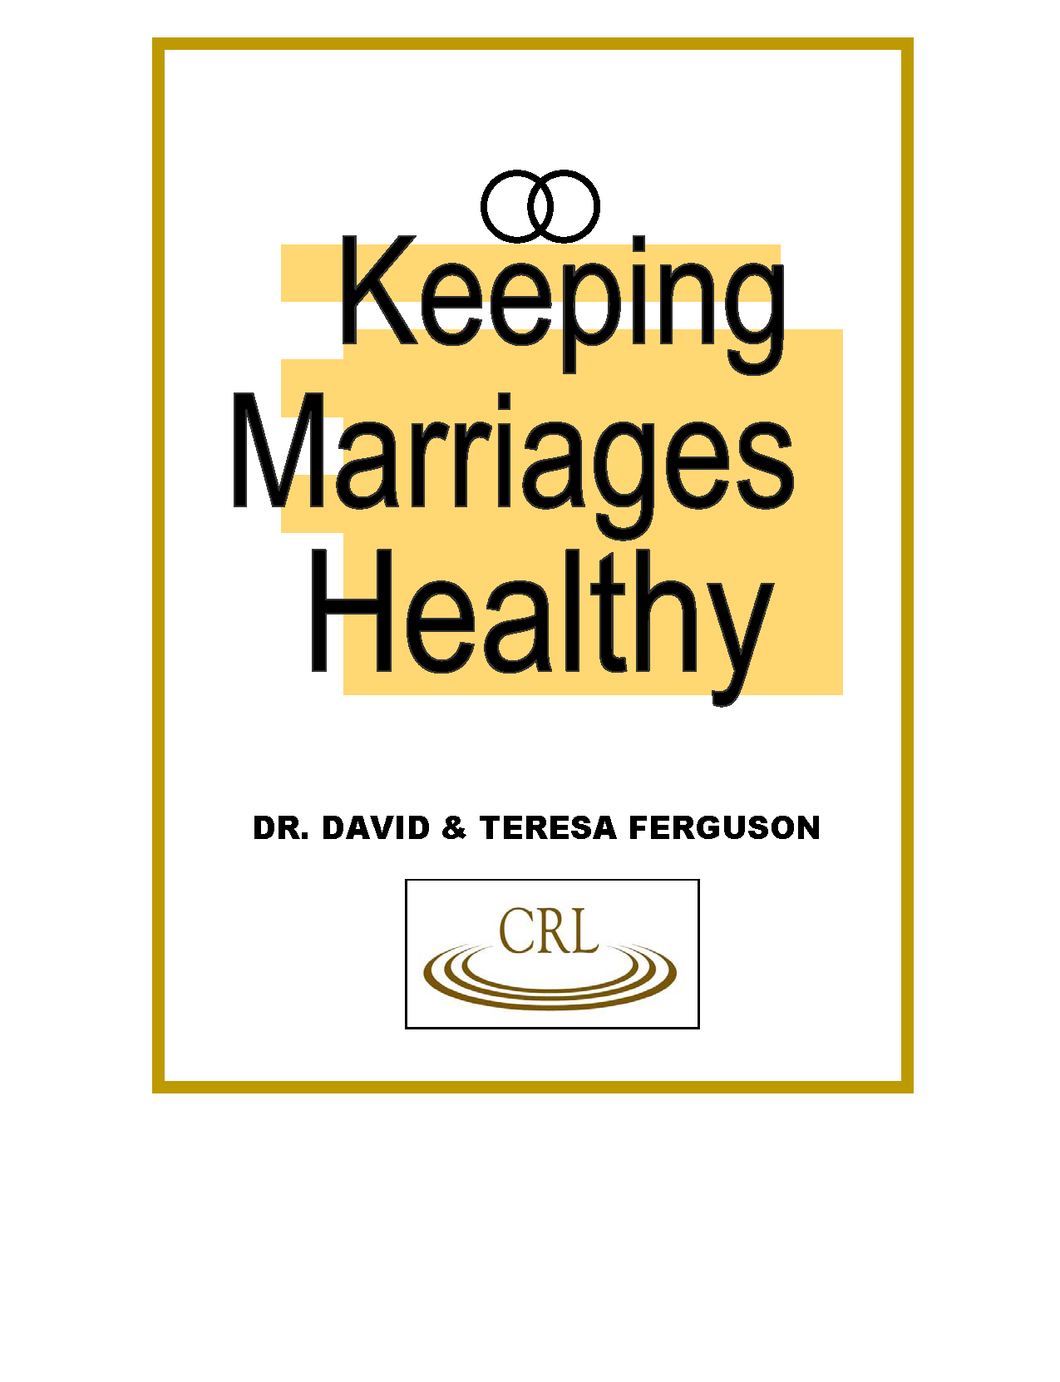 Keeping Marriages Healthy Workbook (Arabic)